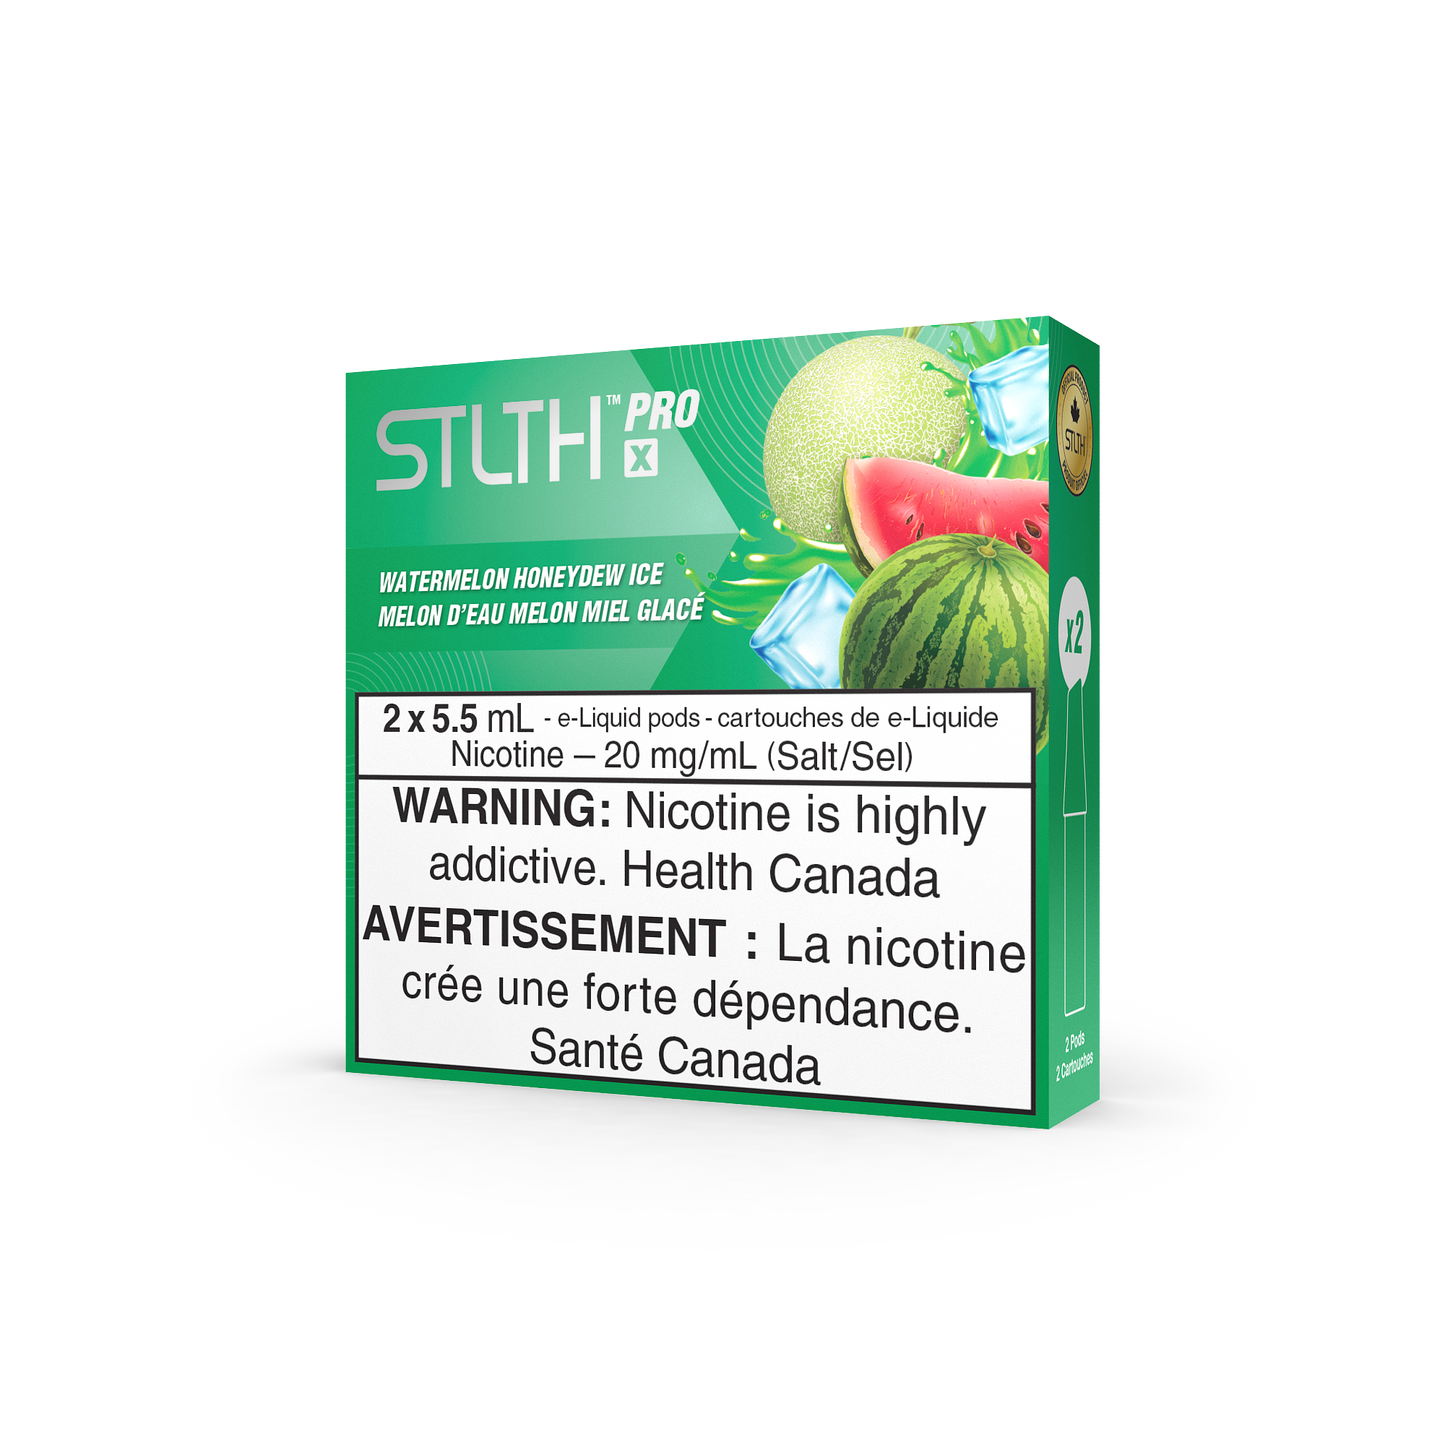 STLTH Pro X - Watermelon Honeydew Ice (Pack of 5)